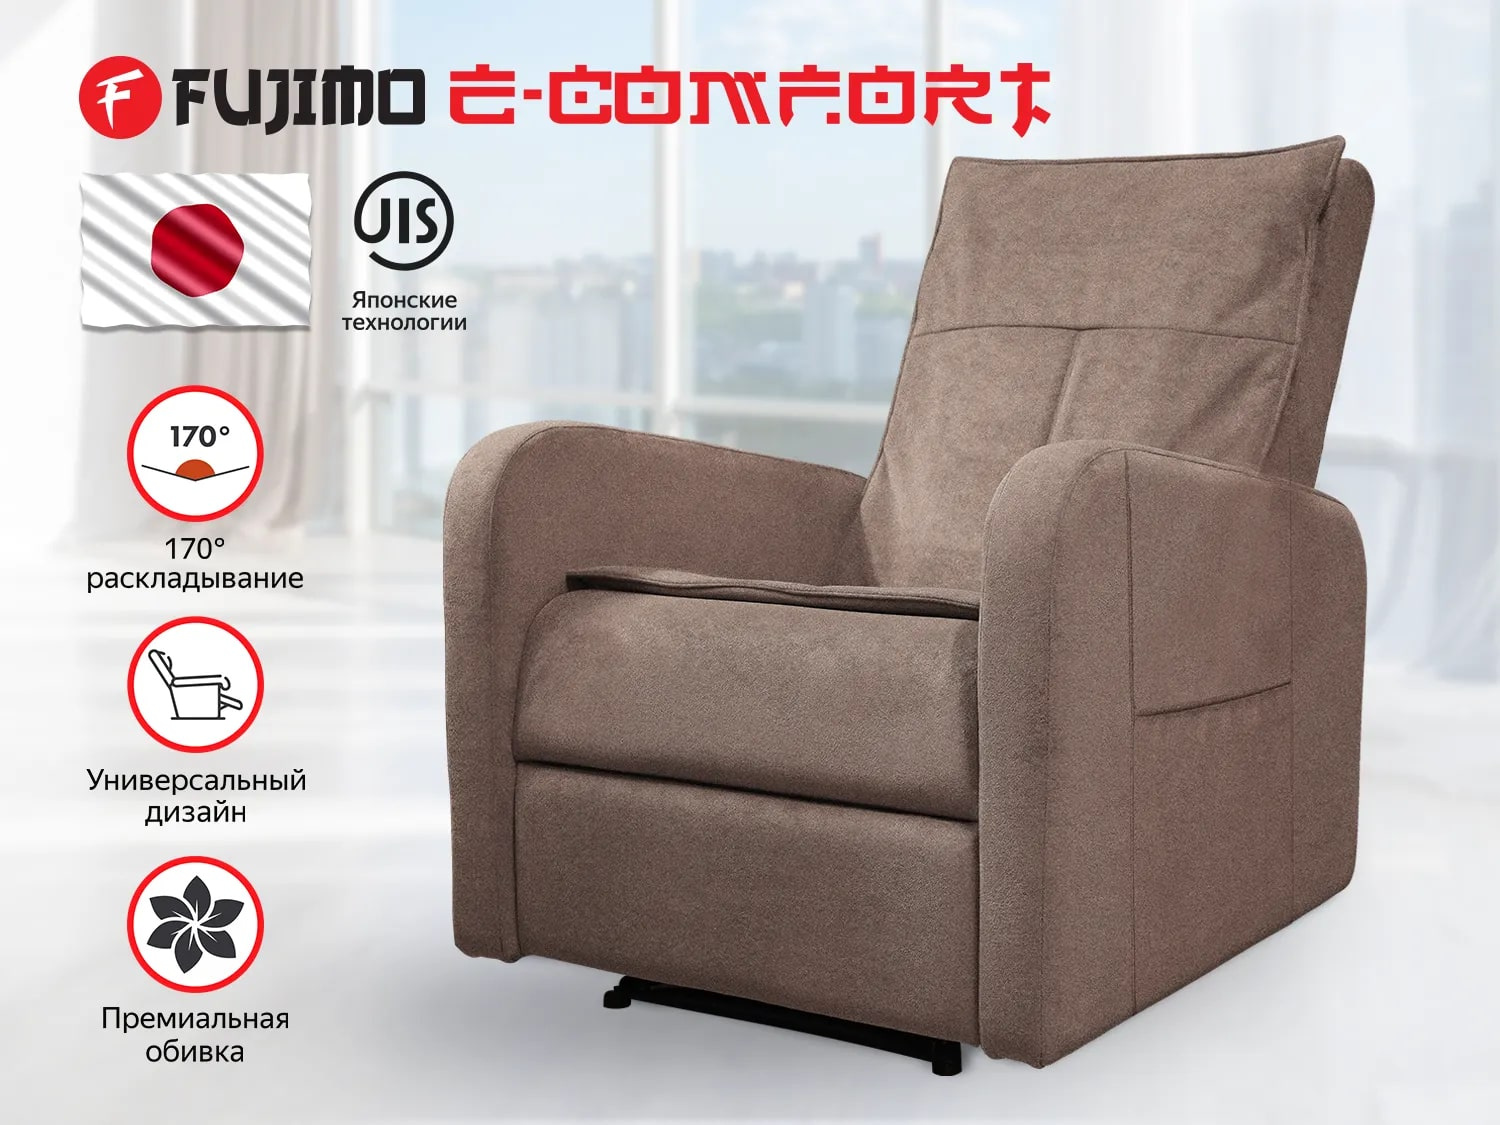 E-COMFORT CHAIR F3005 FEW с электроприводом Терра в Краснодаре по цене 63000 ₽ в категории массажные кресла Fujimo